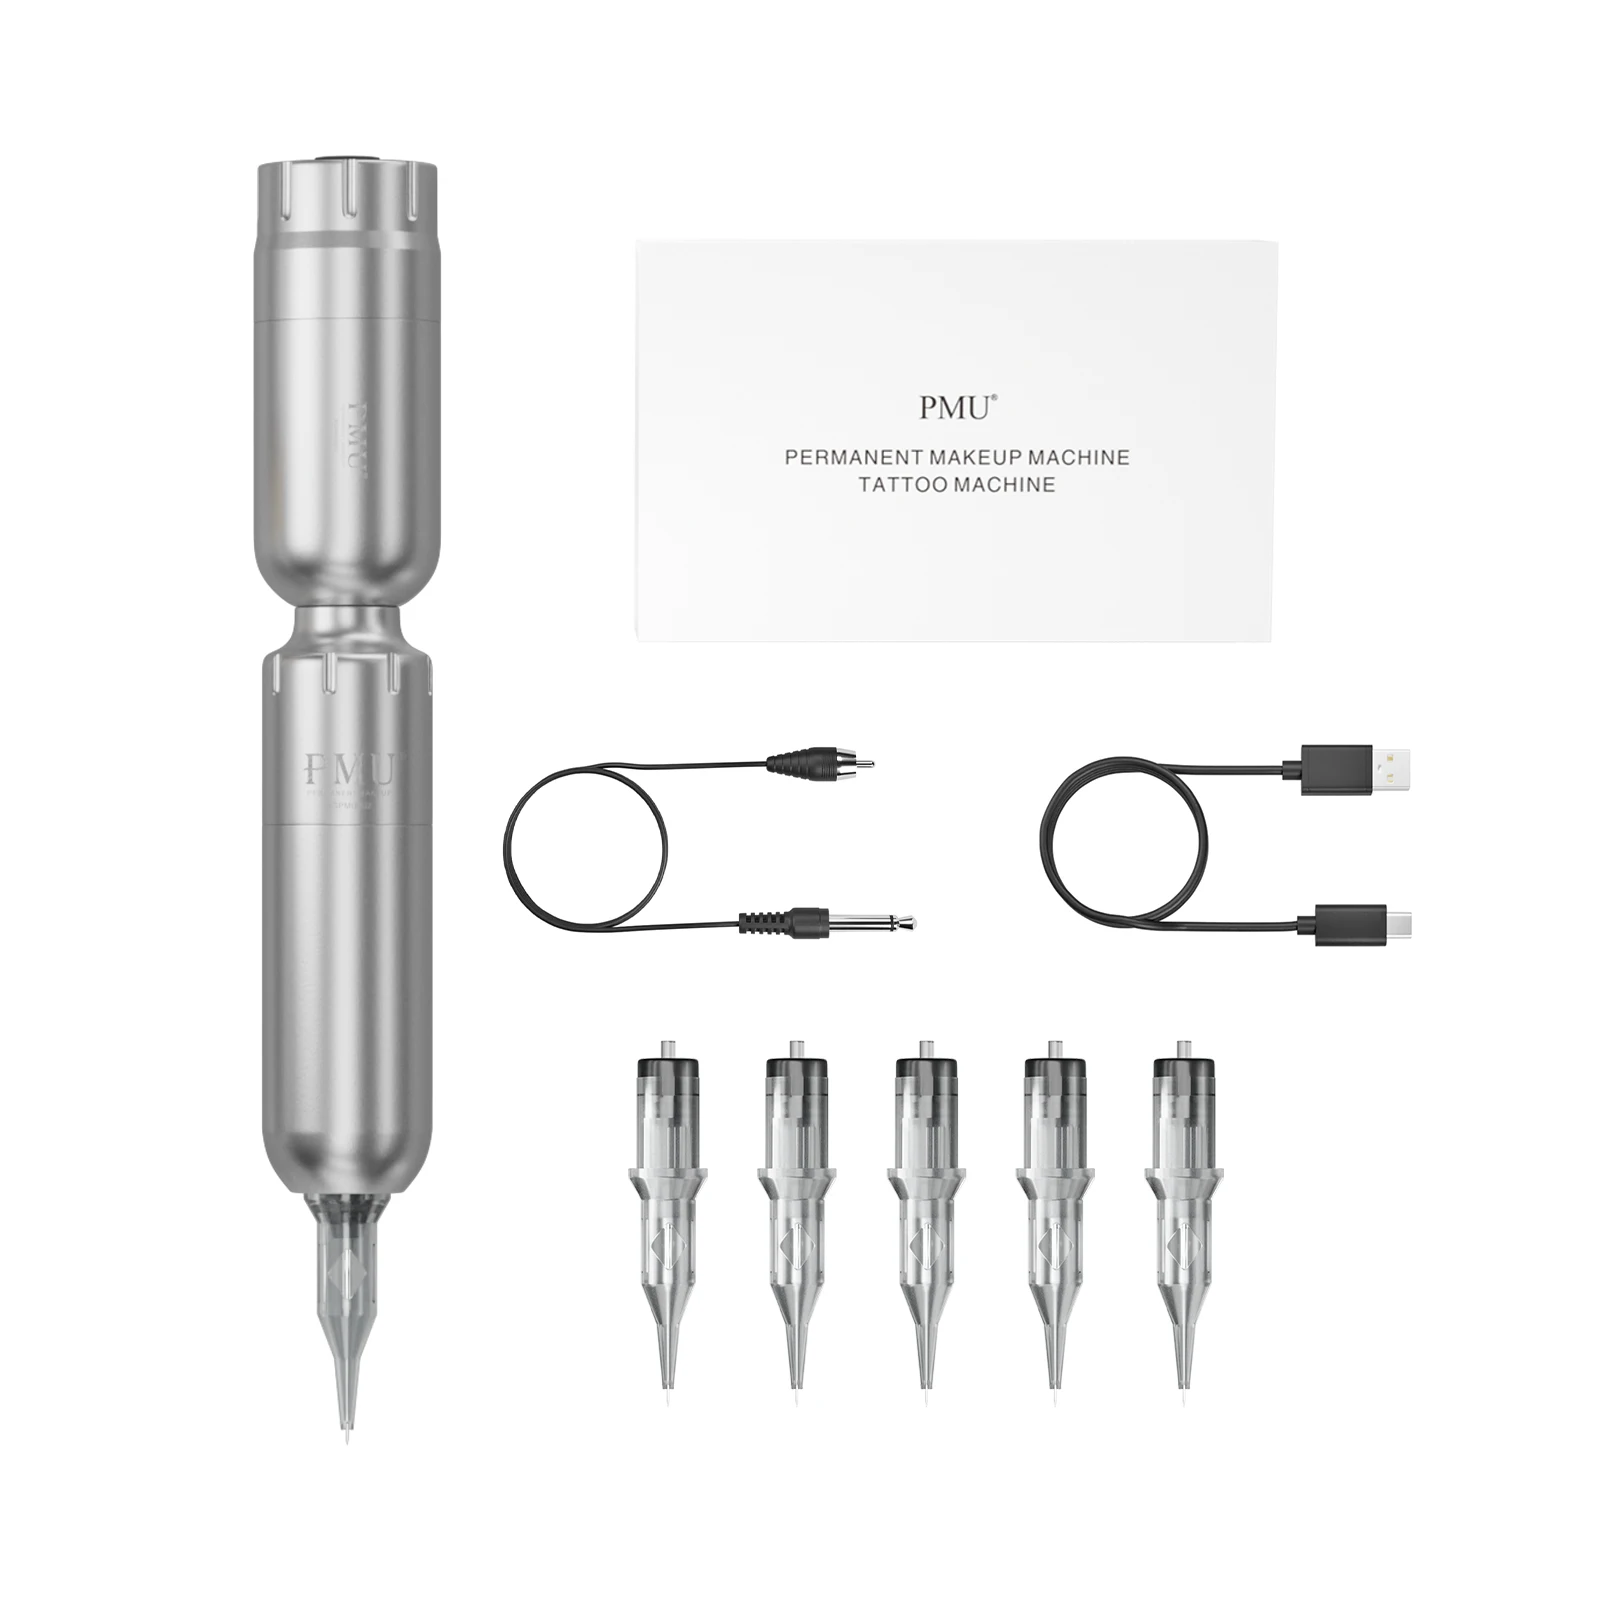 Mast Magnetic Attraction Pmu Permanent Makeup Tattoo Machine Pen Needles  Kit | eBay